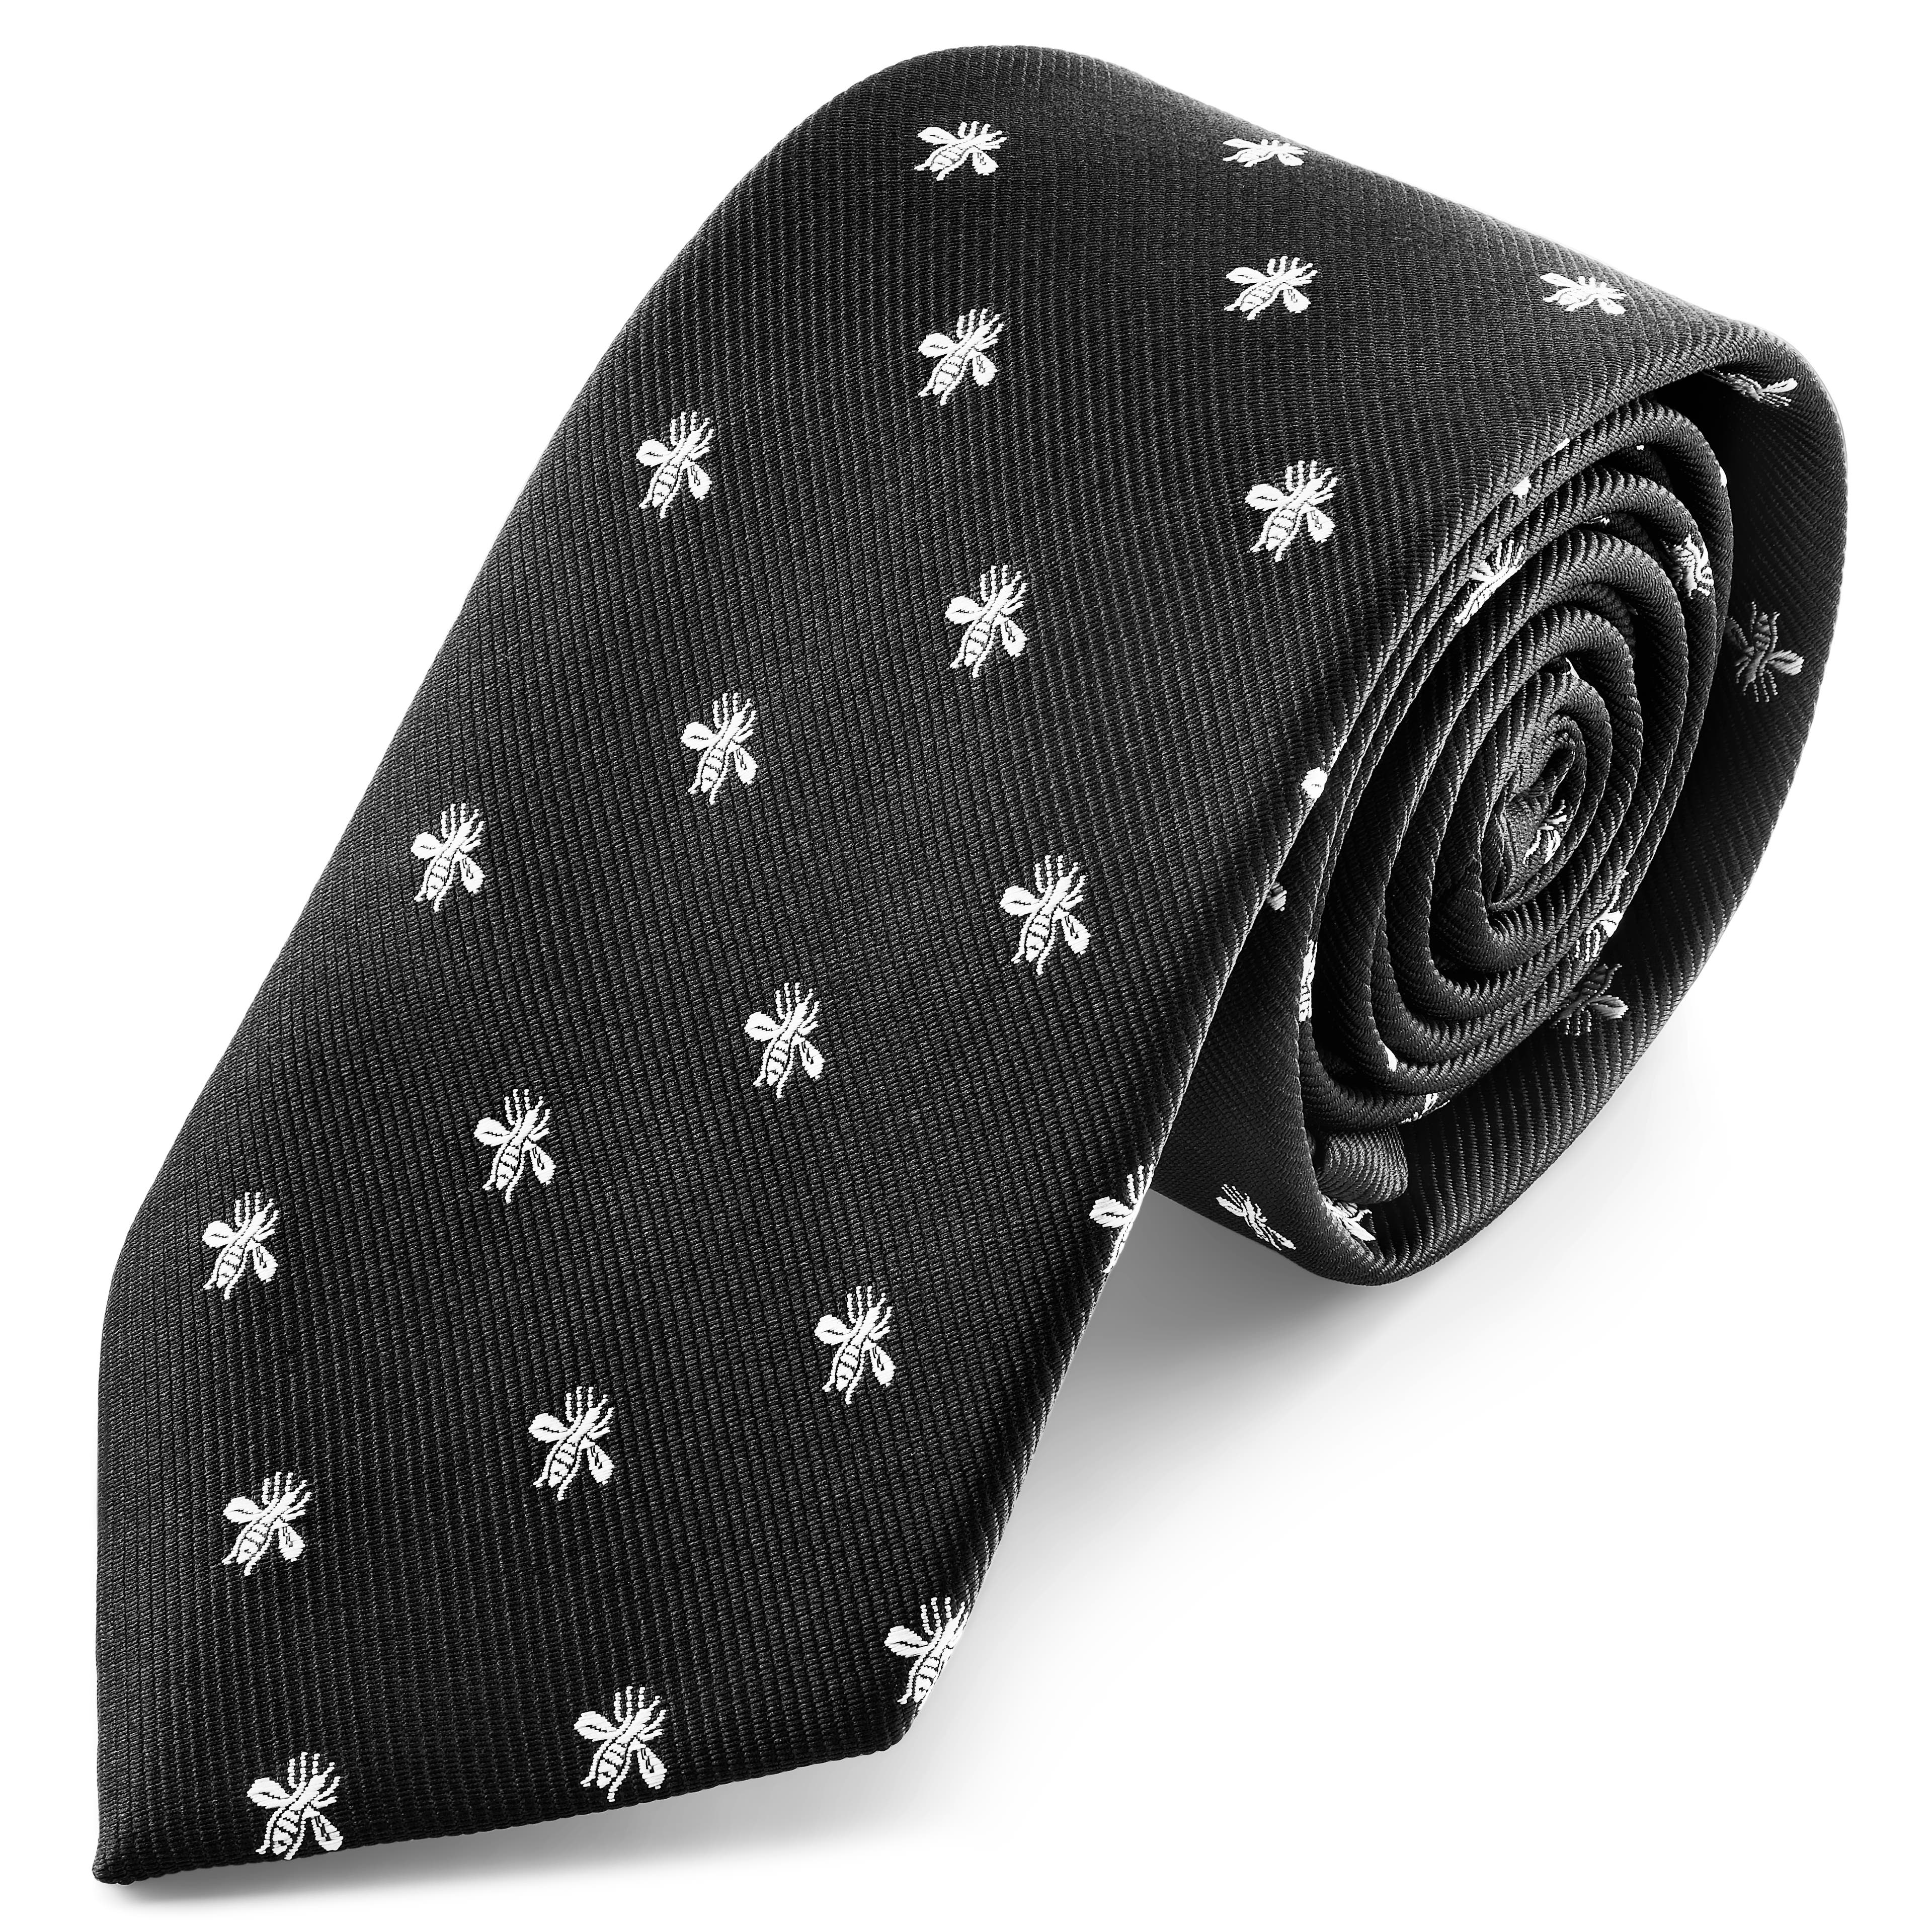 Zoikos | 7 cm Black & White Bee Tie